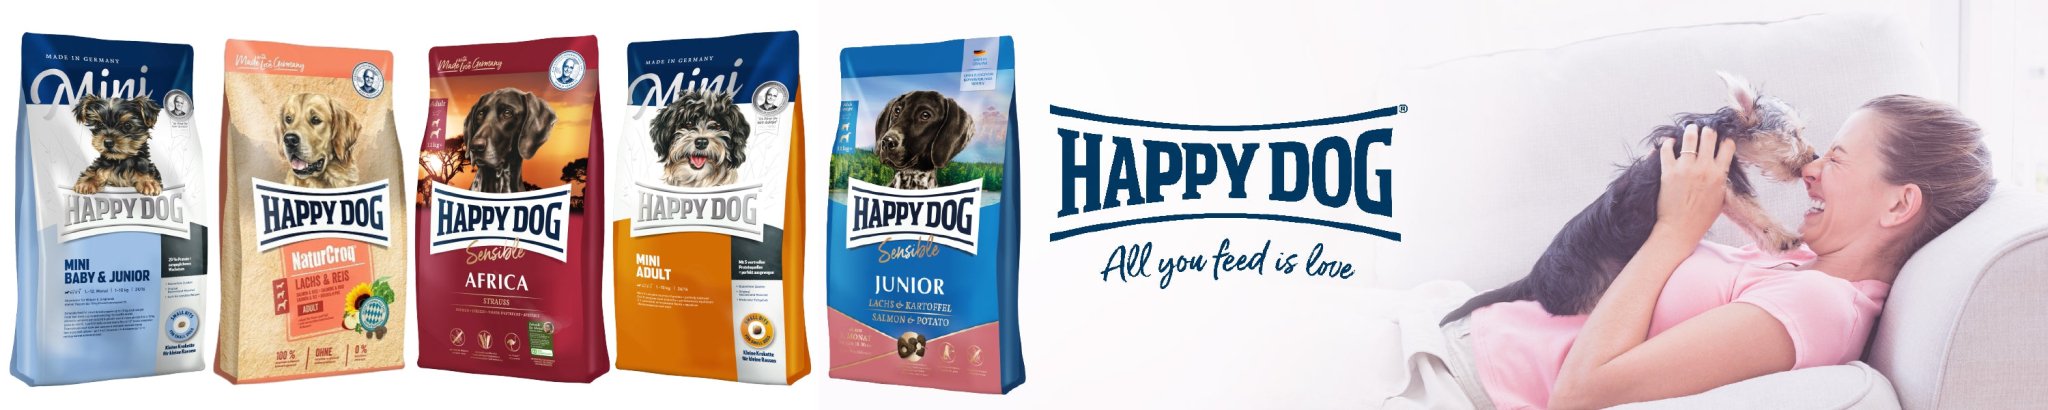 HAPPY DOG - The Pets Club